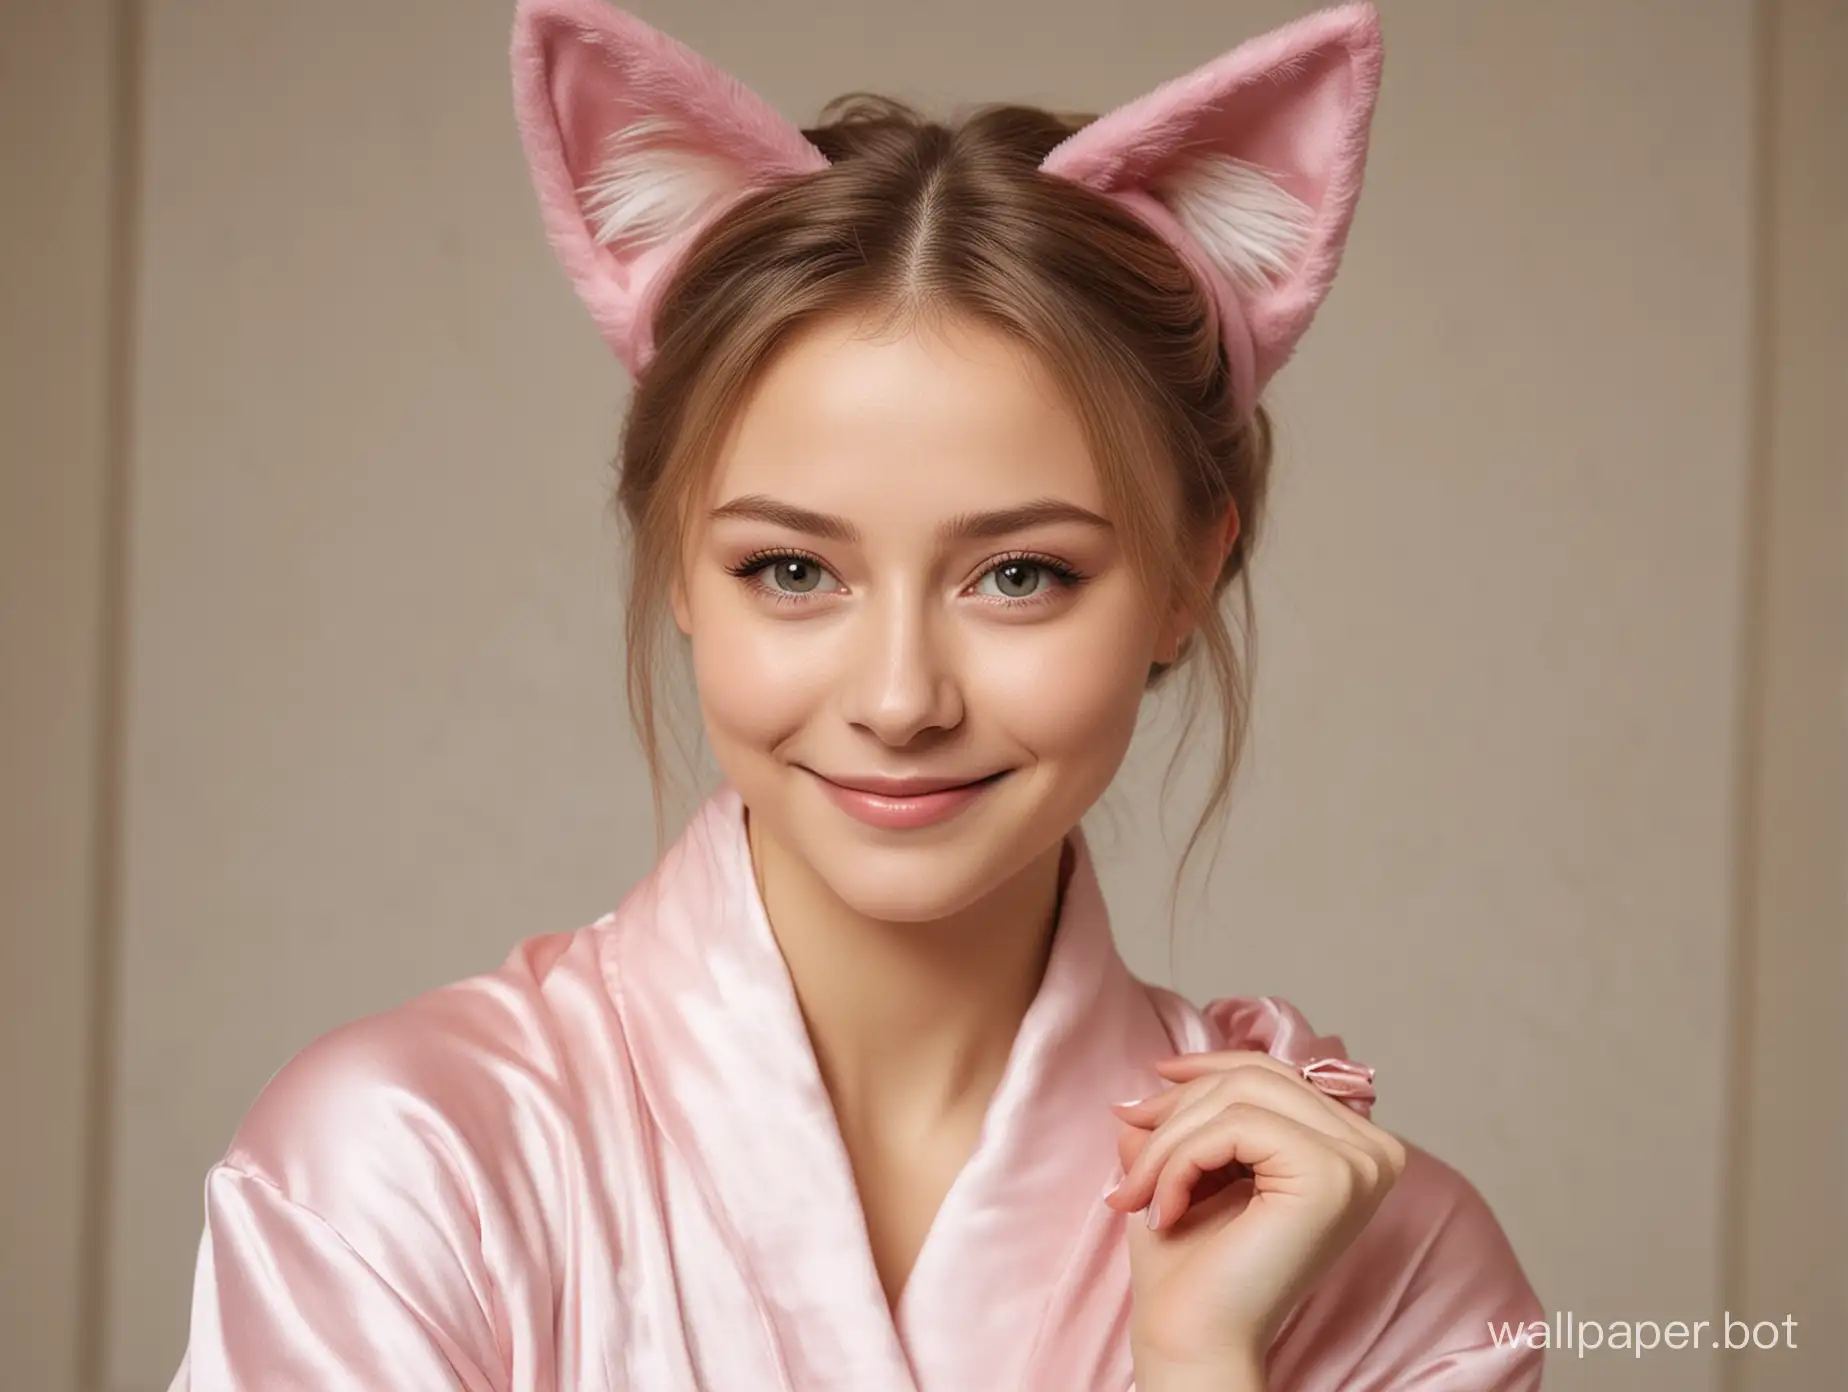 Yulia-Lipnitskaya-Smiles-in-Silk-Robe-with-Cat-Ears